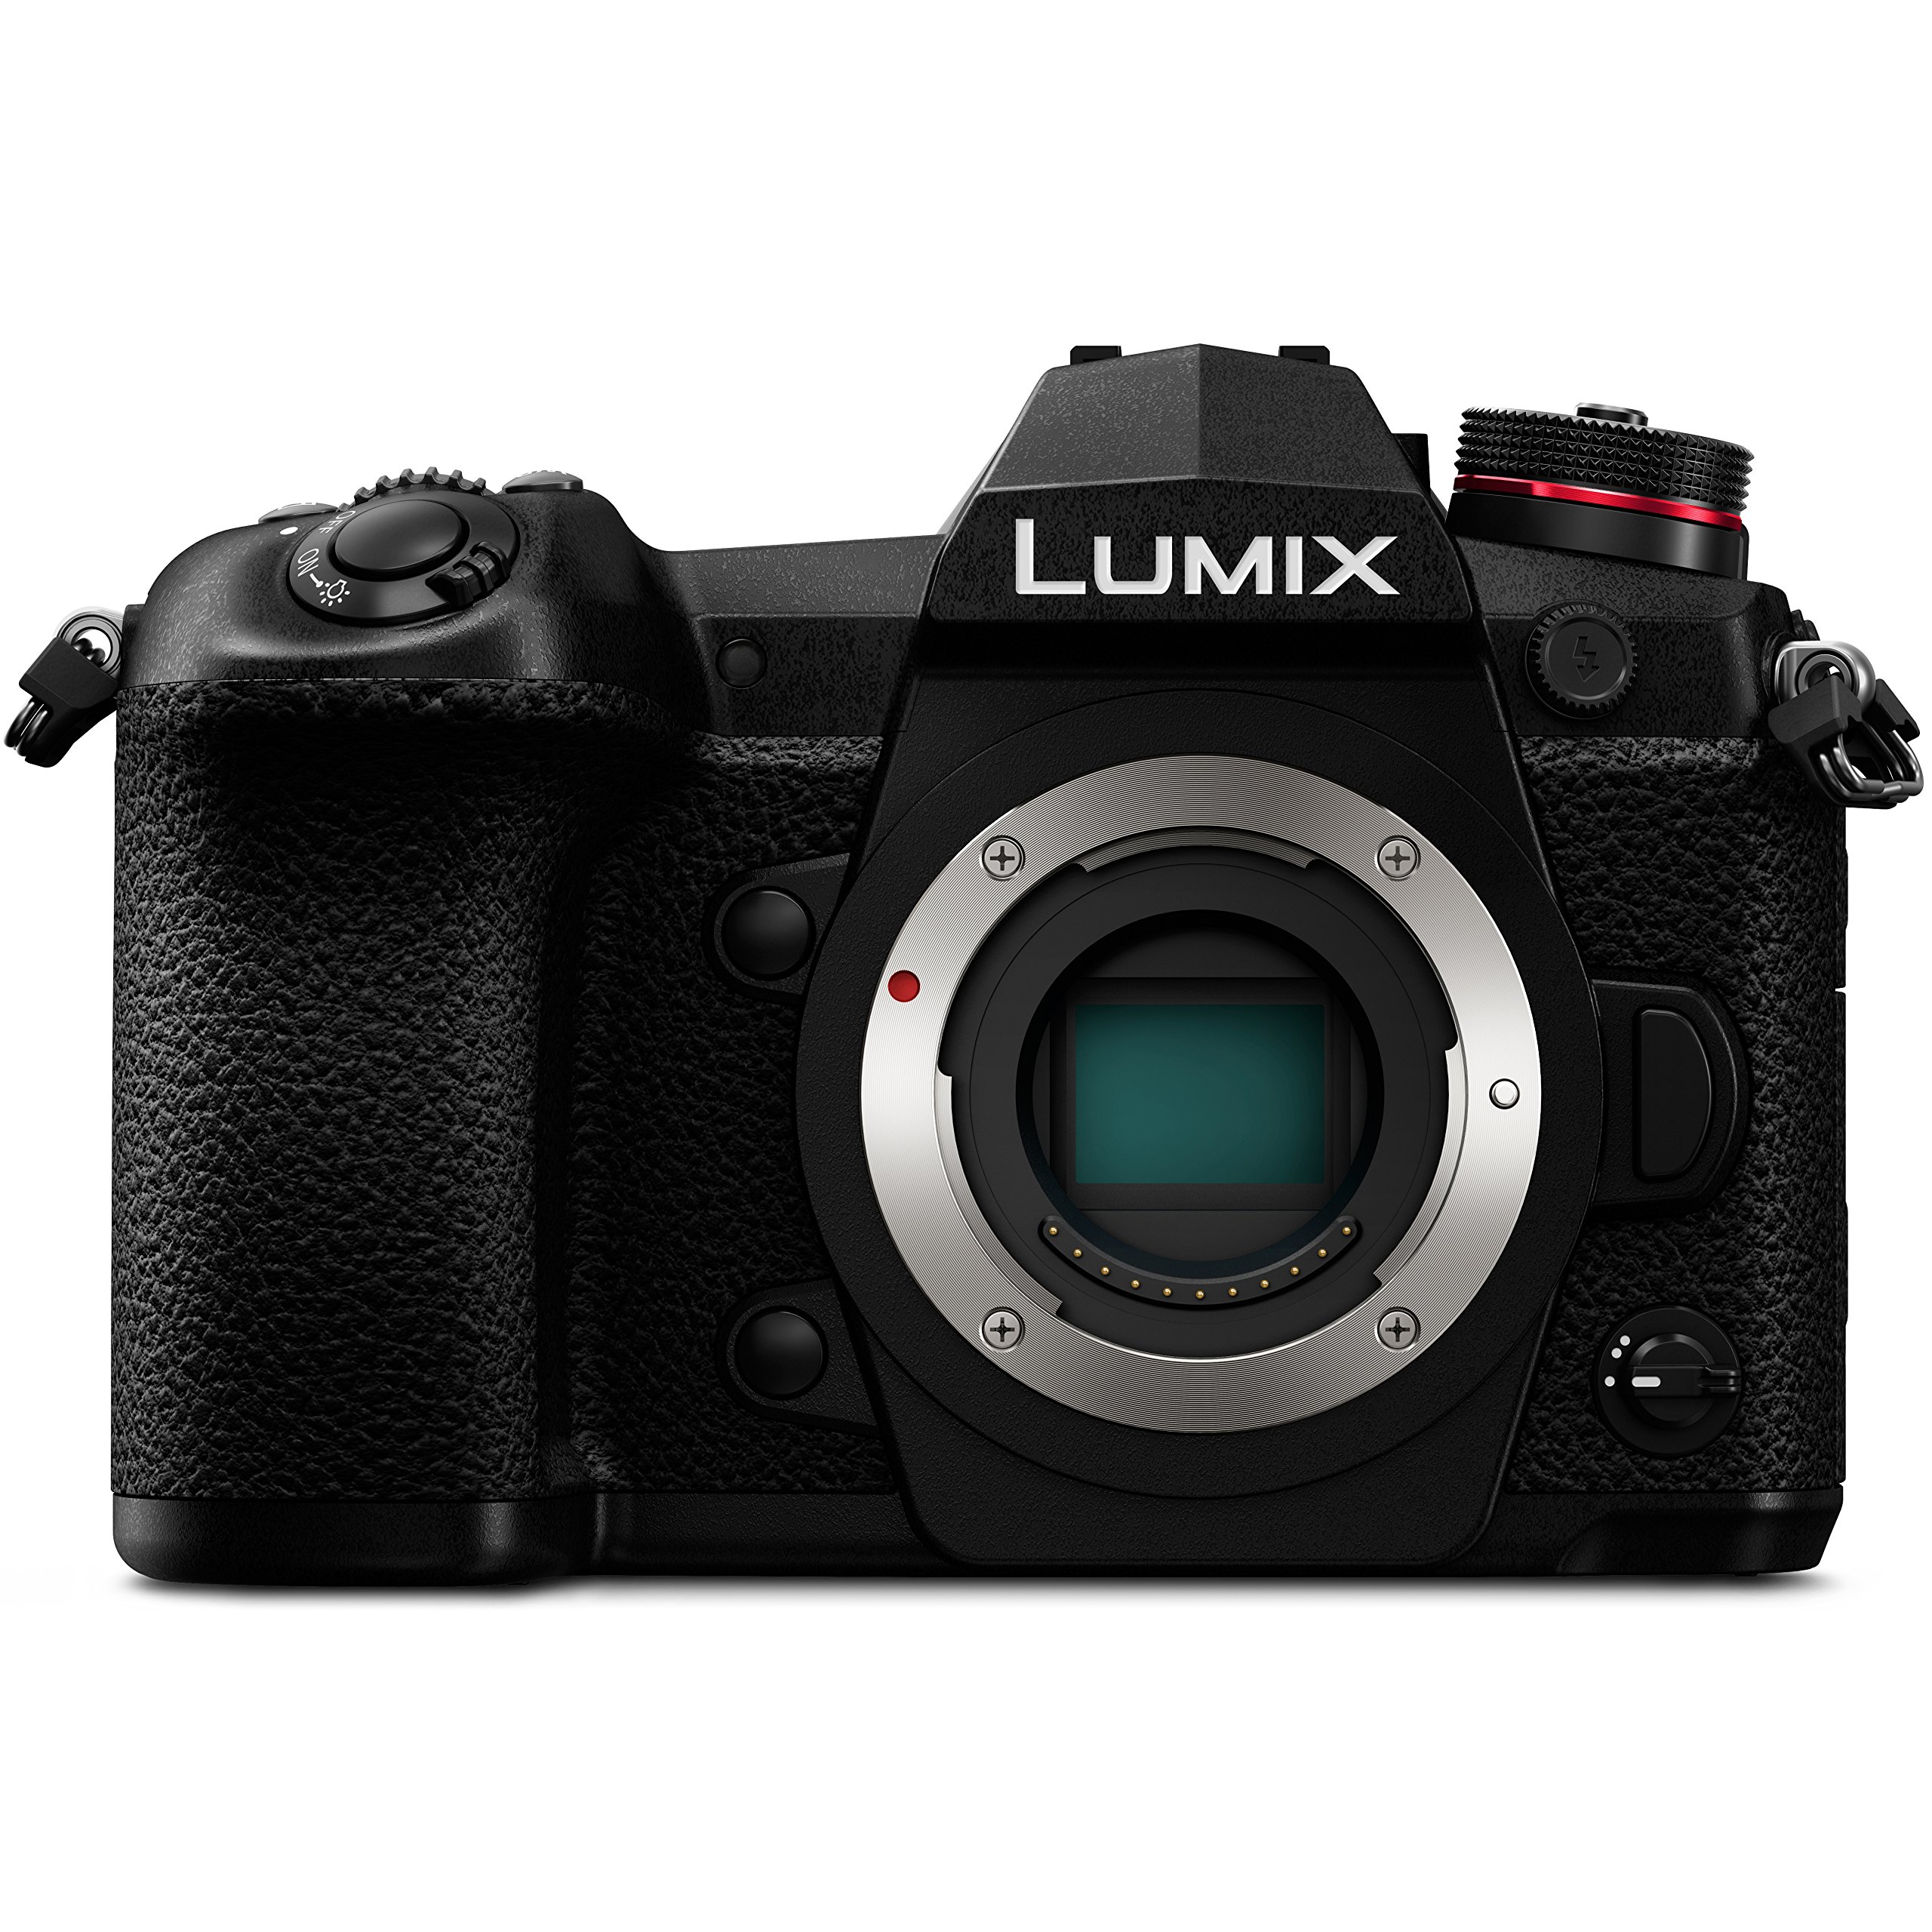 Panasonic LUMIX G9 4Kデジタルカメラ、2030万画素ミラーレスカメラ+8000万画素高解像度モード